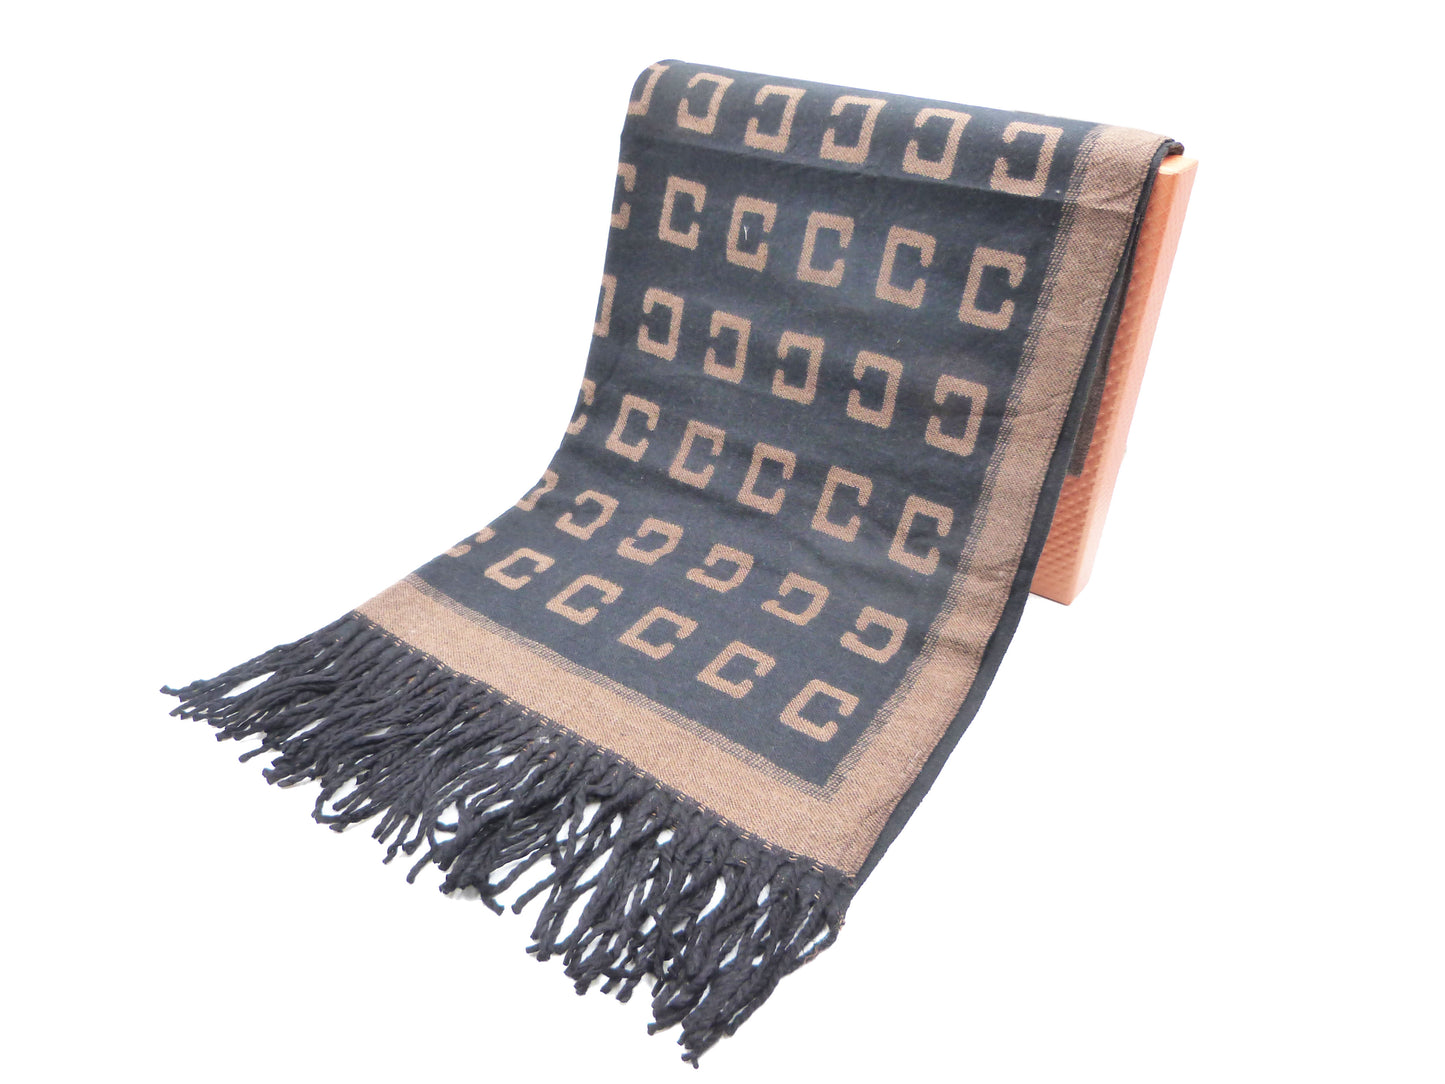 High Quality Pashmina Wrap Winter Blanket Scarf